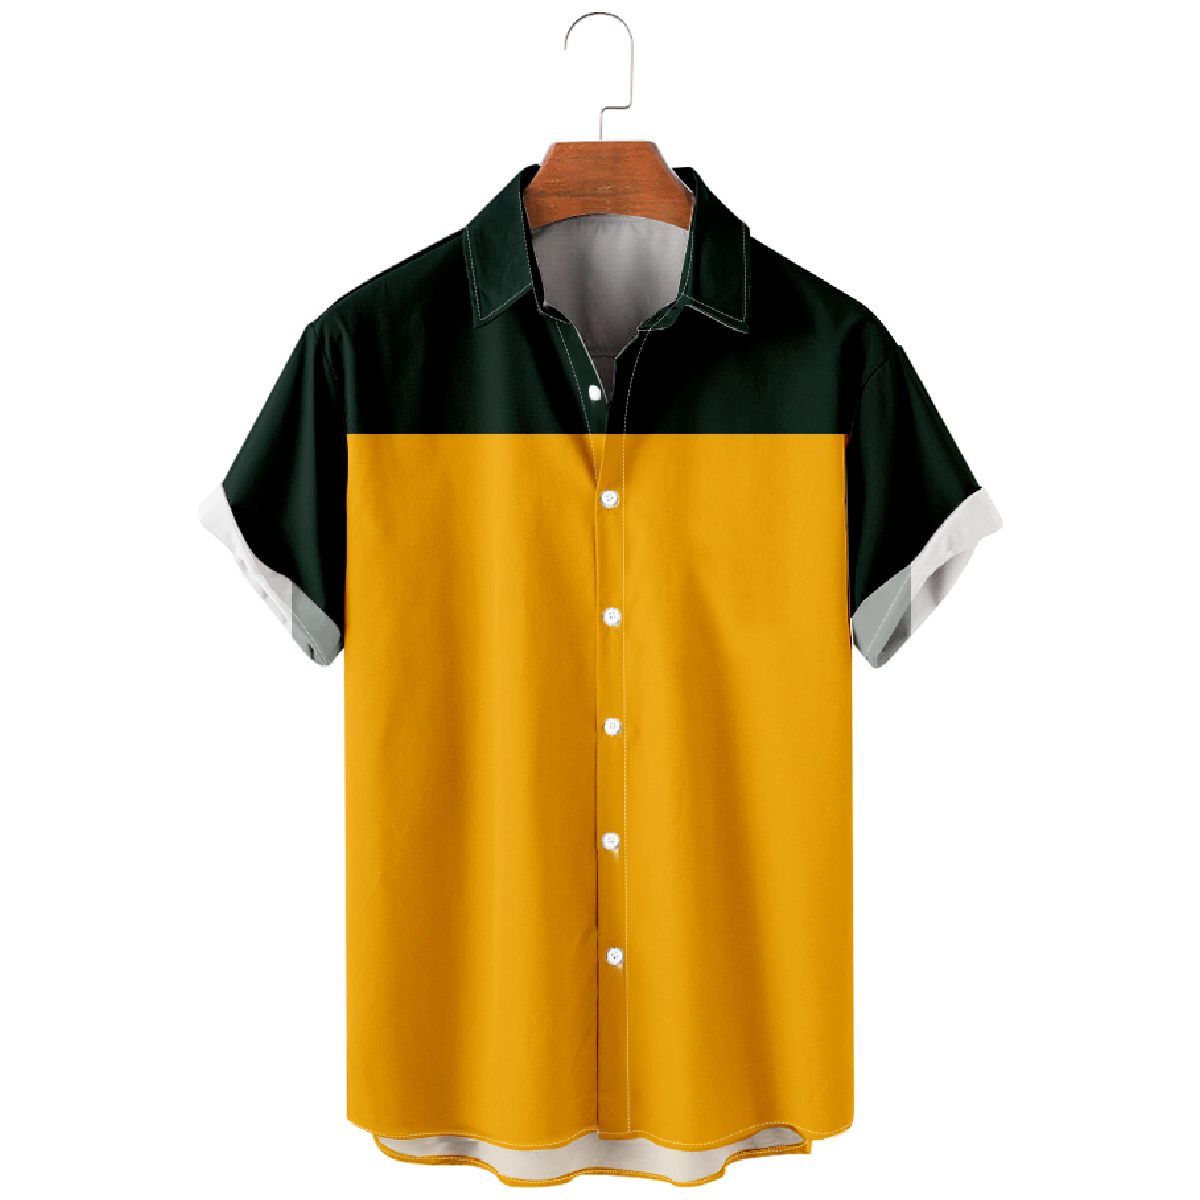 Mens American Football Green Bay Dark Green and Gold Button Up Shirt Short Sleeve Regular Fit Breathable Shirt